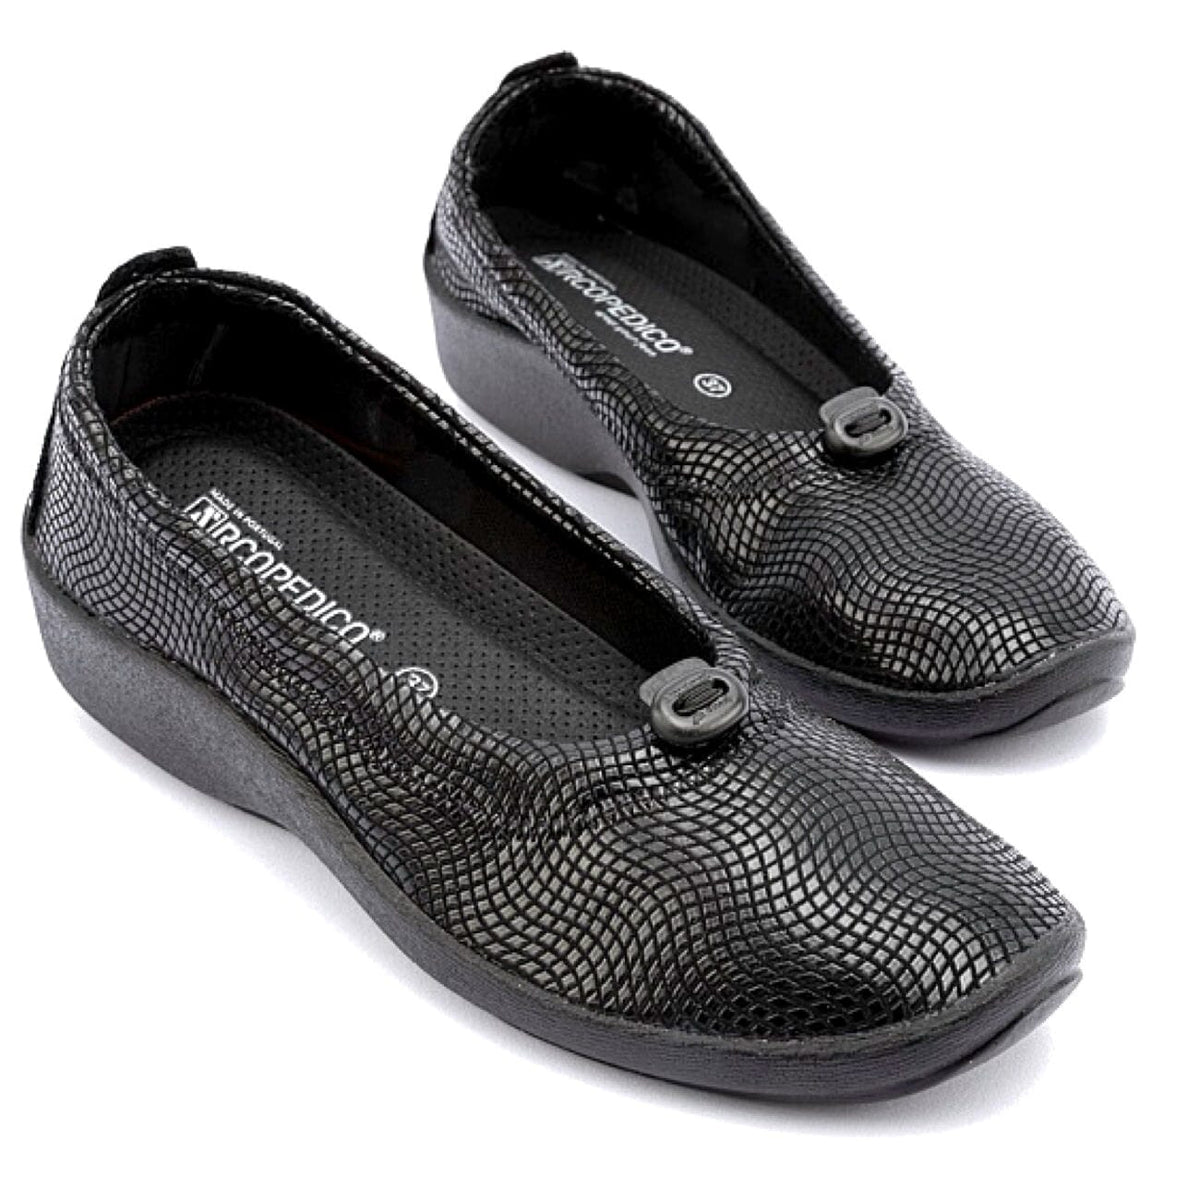 Arcopedico, L14 Creative, Lytech, J17 Black Shoes Arcopedico 